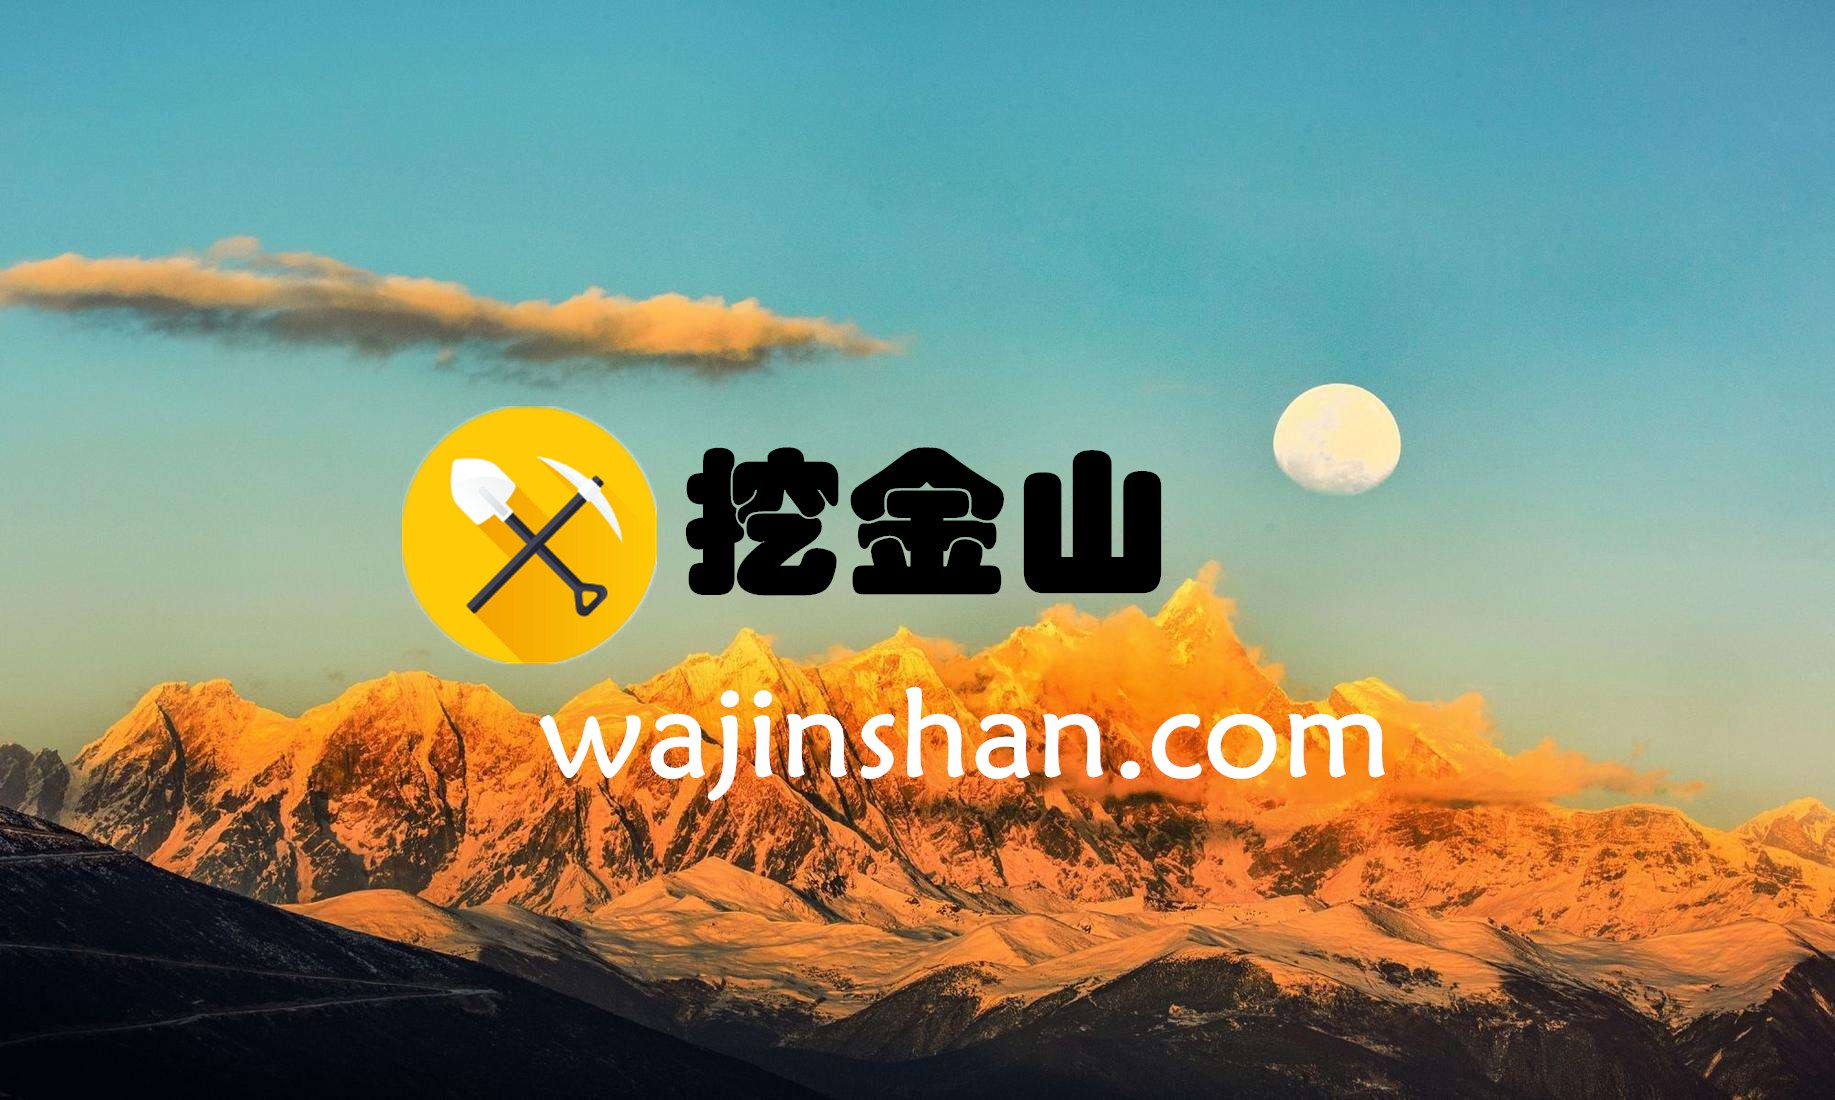 wajinshan.com